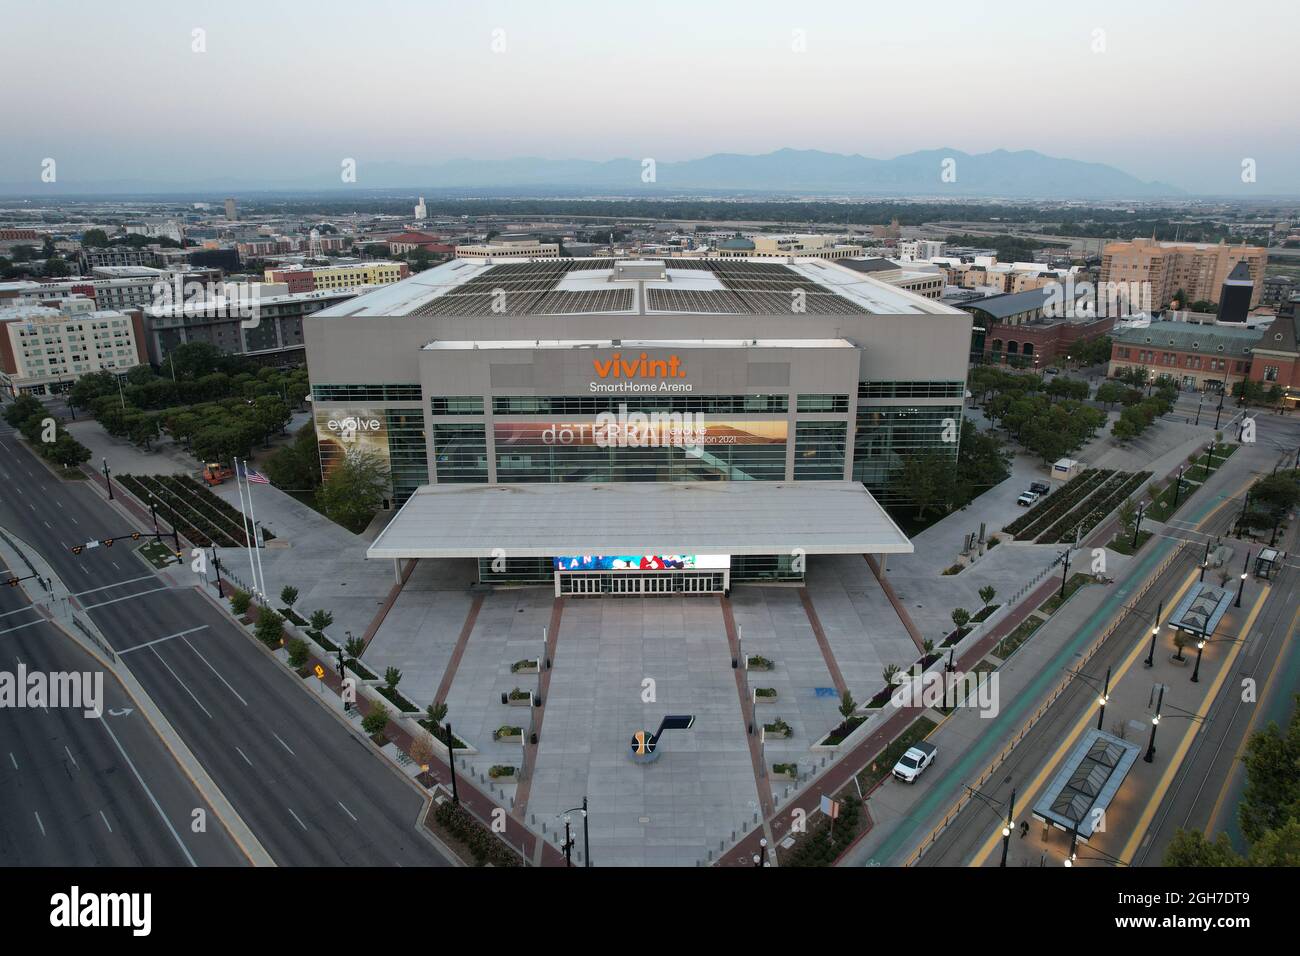 File:Vivint Smart Home Arena, Salt Lake City, Utah.jpg - Wikimedia